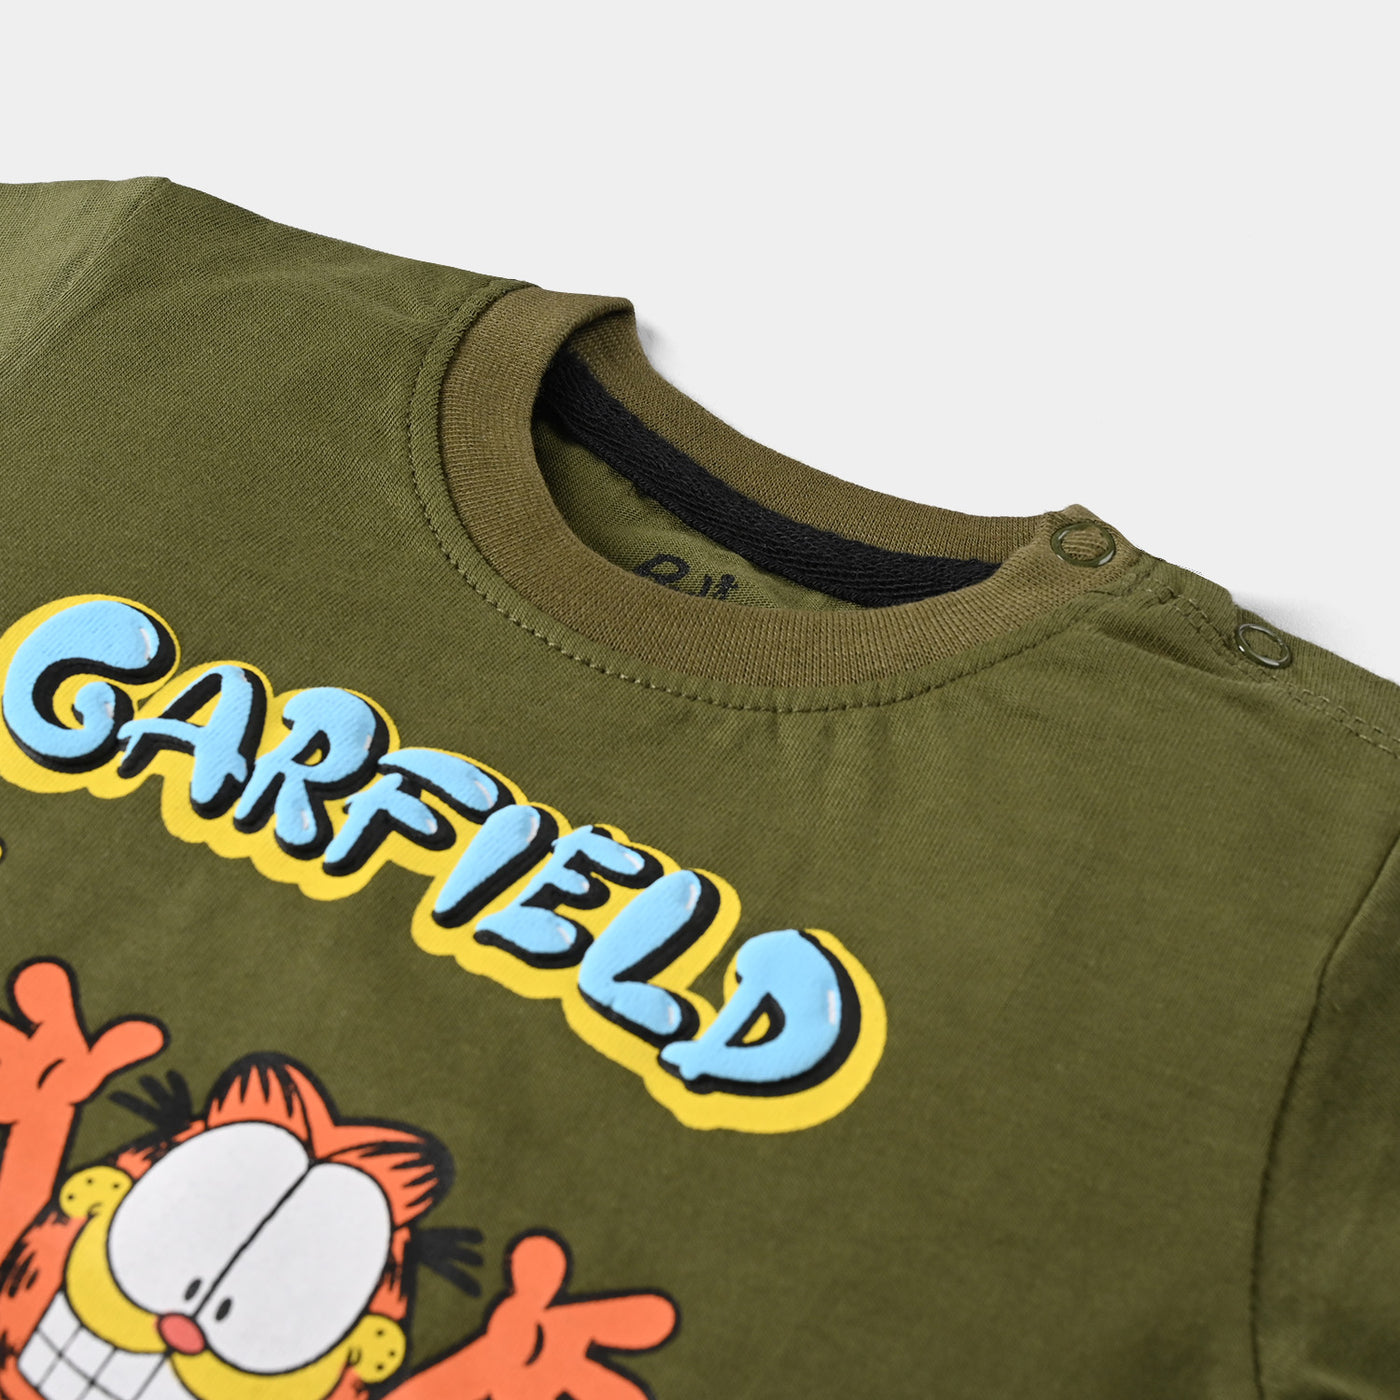 Infant Boys Slub Jersey T-Shirt Garfield-C. Olive